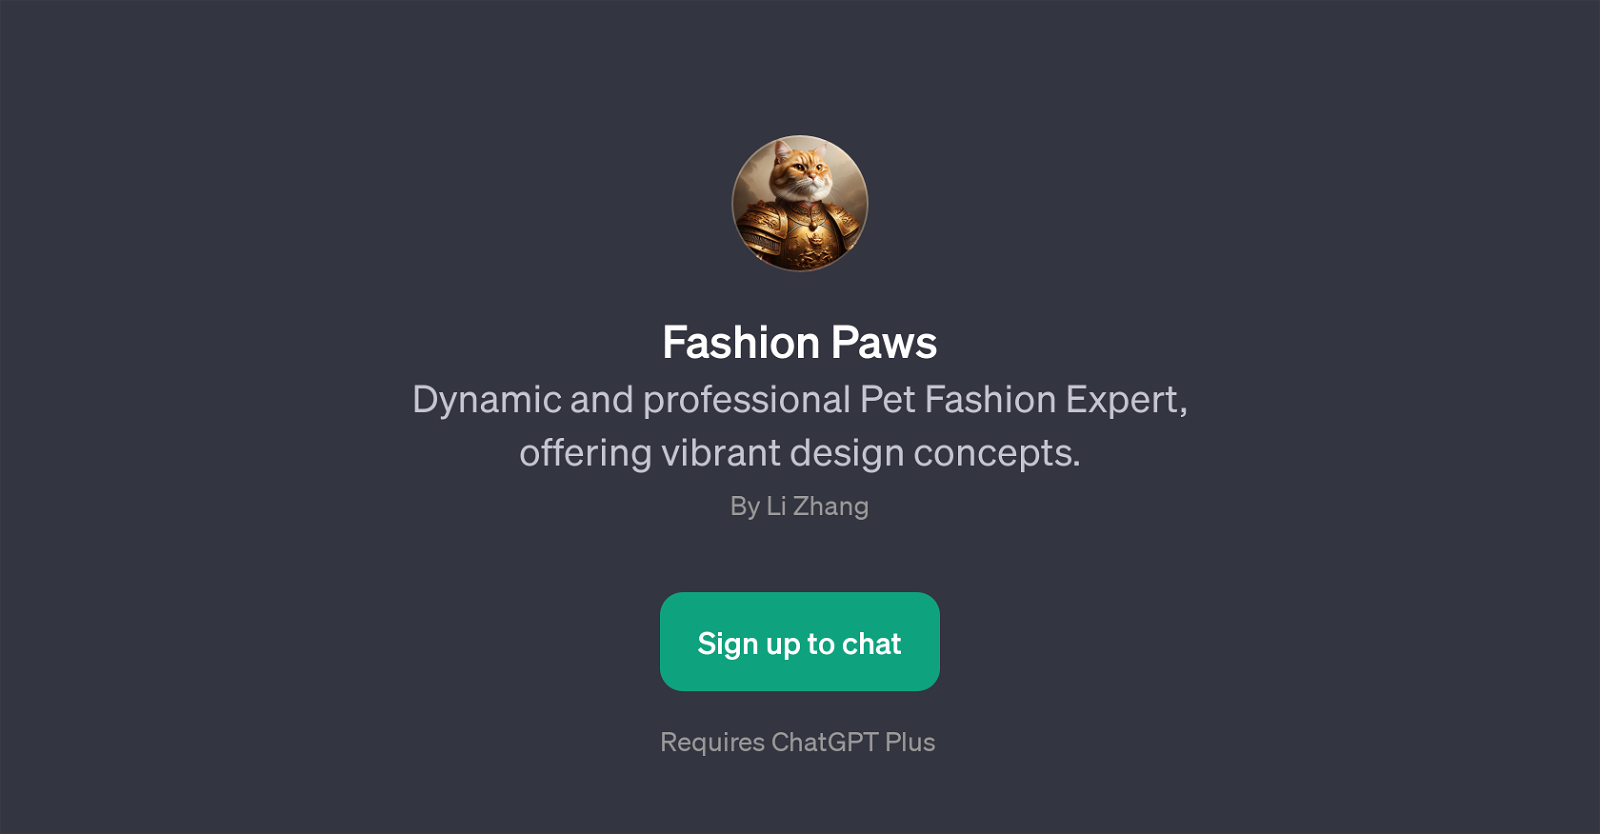 Fashion Paws website